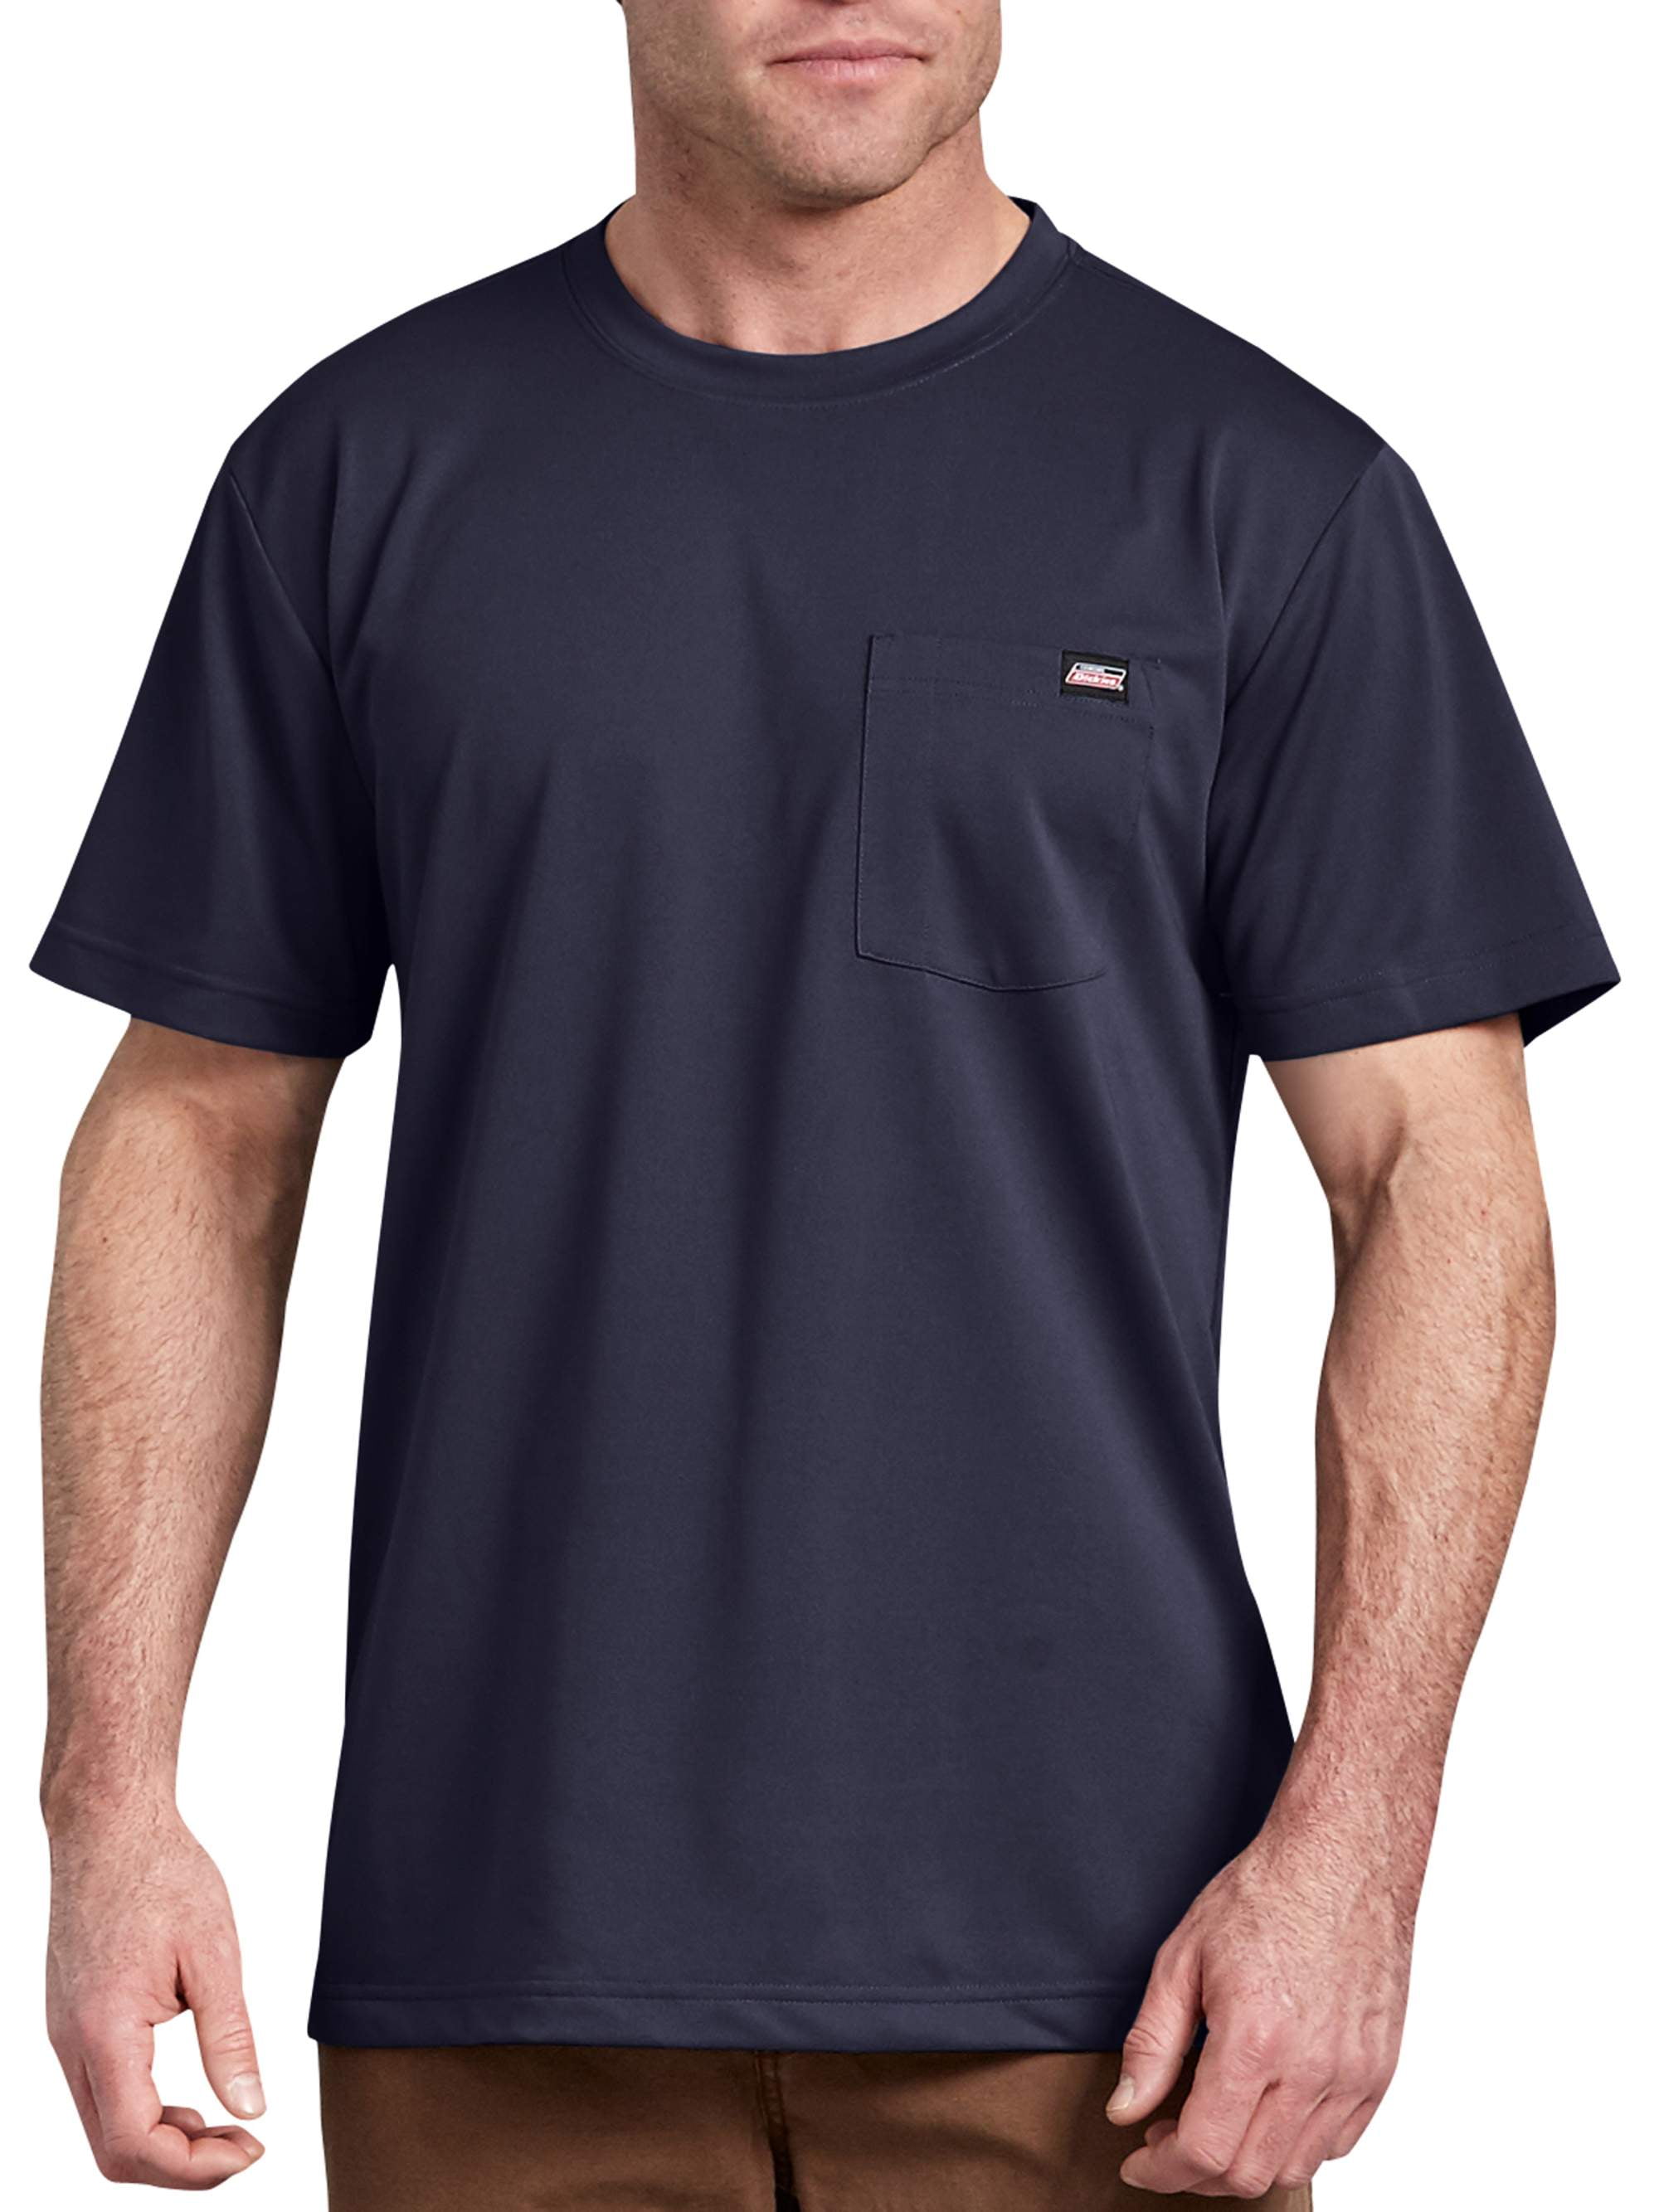 genuine-dickies-men-s-short-sleeve-performance-pocket-t-shirt